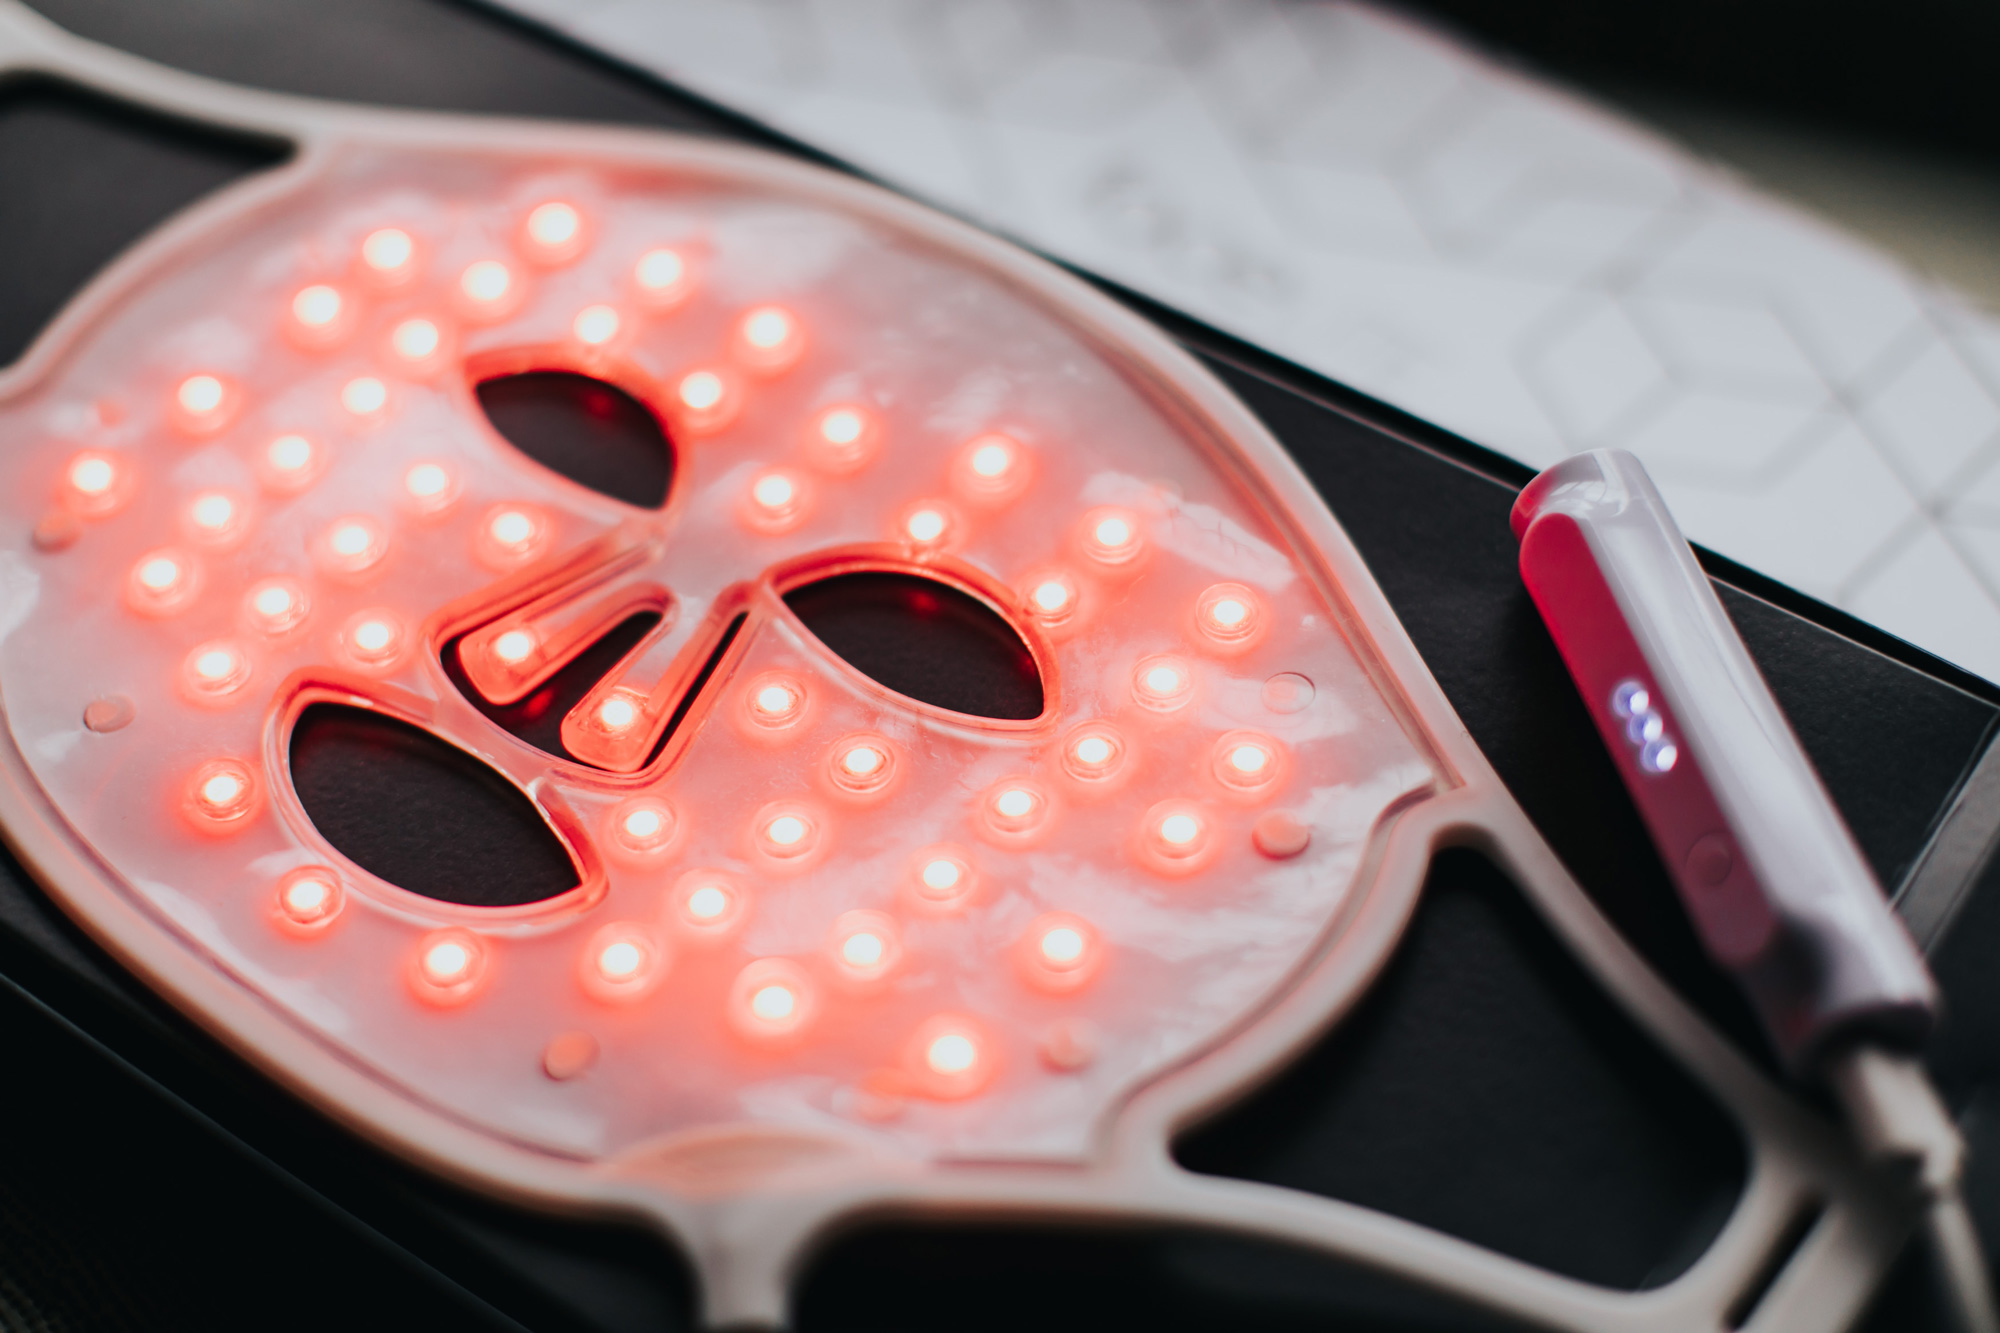 FaceLite LED Mask with light on